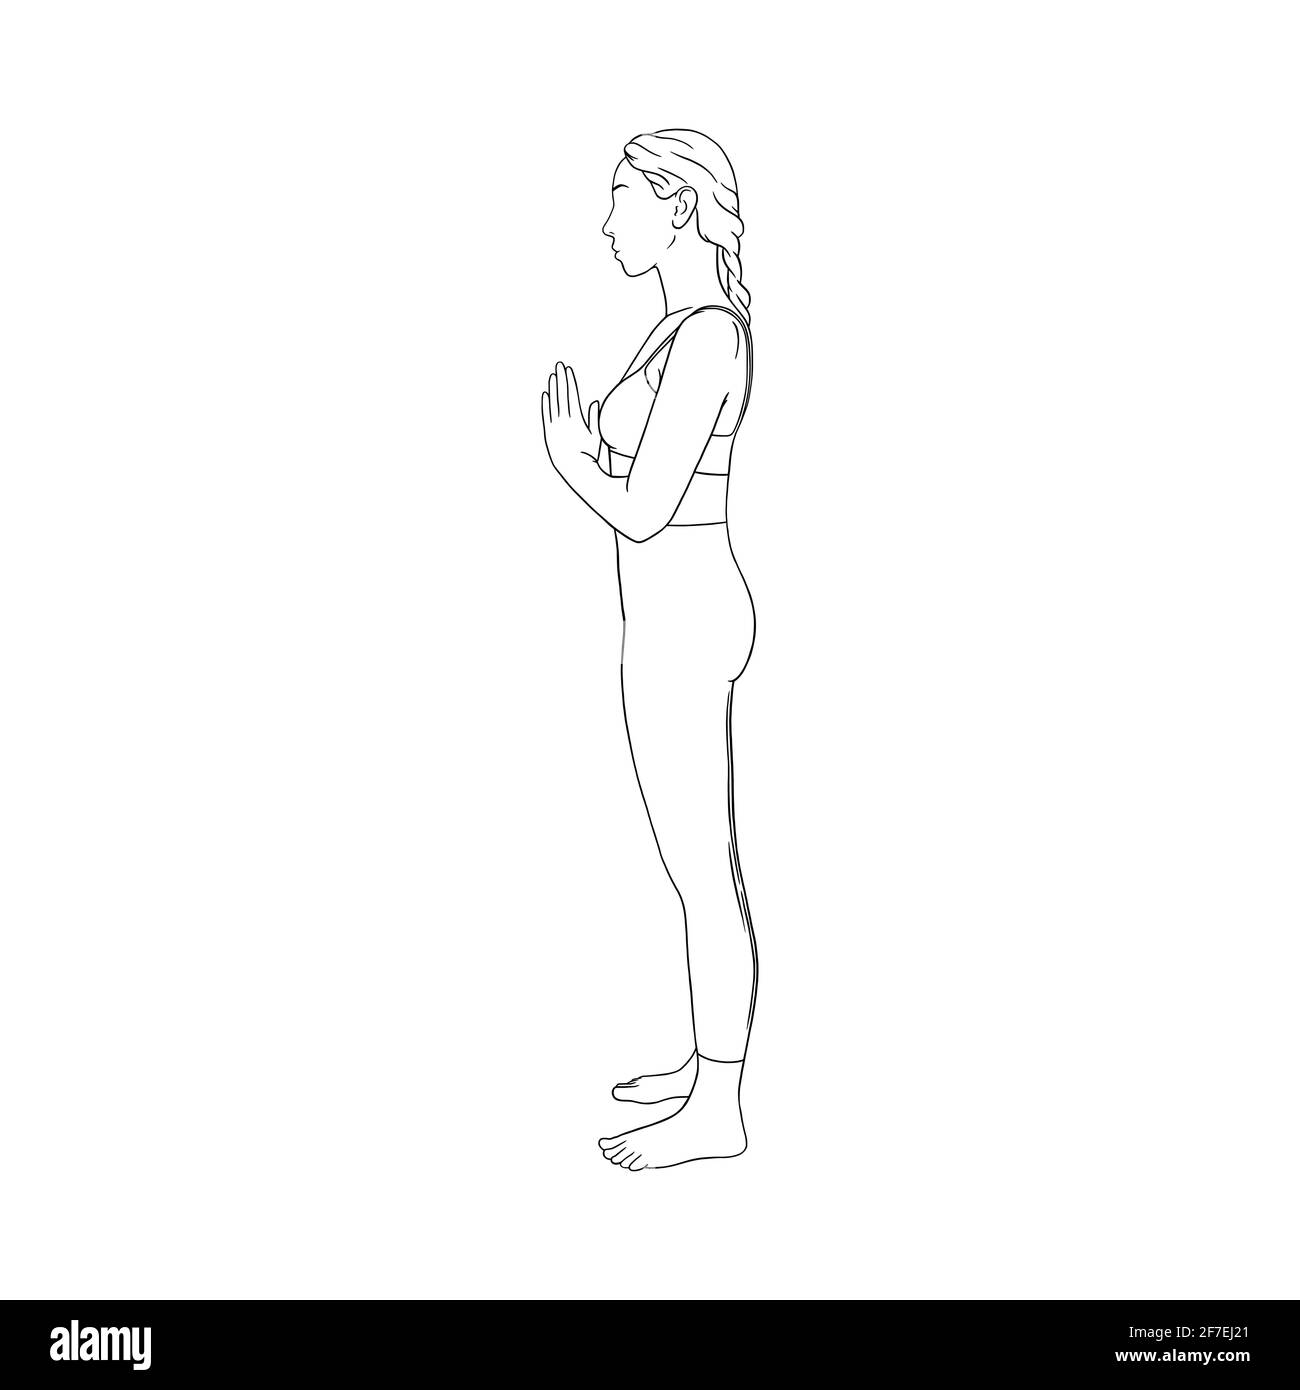 Yoga tadasana stock illustration. Illustration of female - 108556226 |  Tadasana pose drawing, Yoga cartoon, Illustration